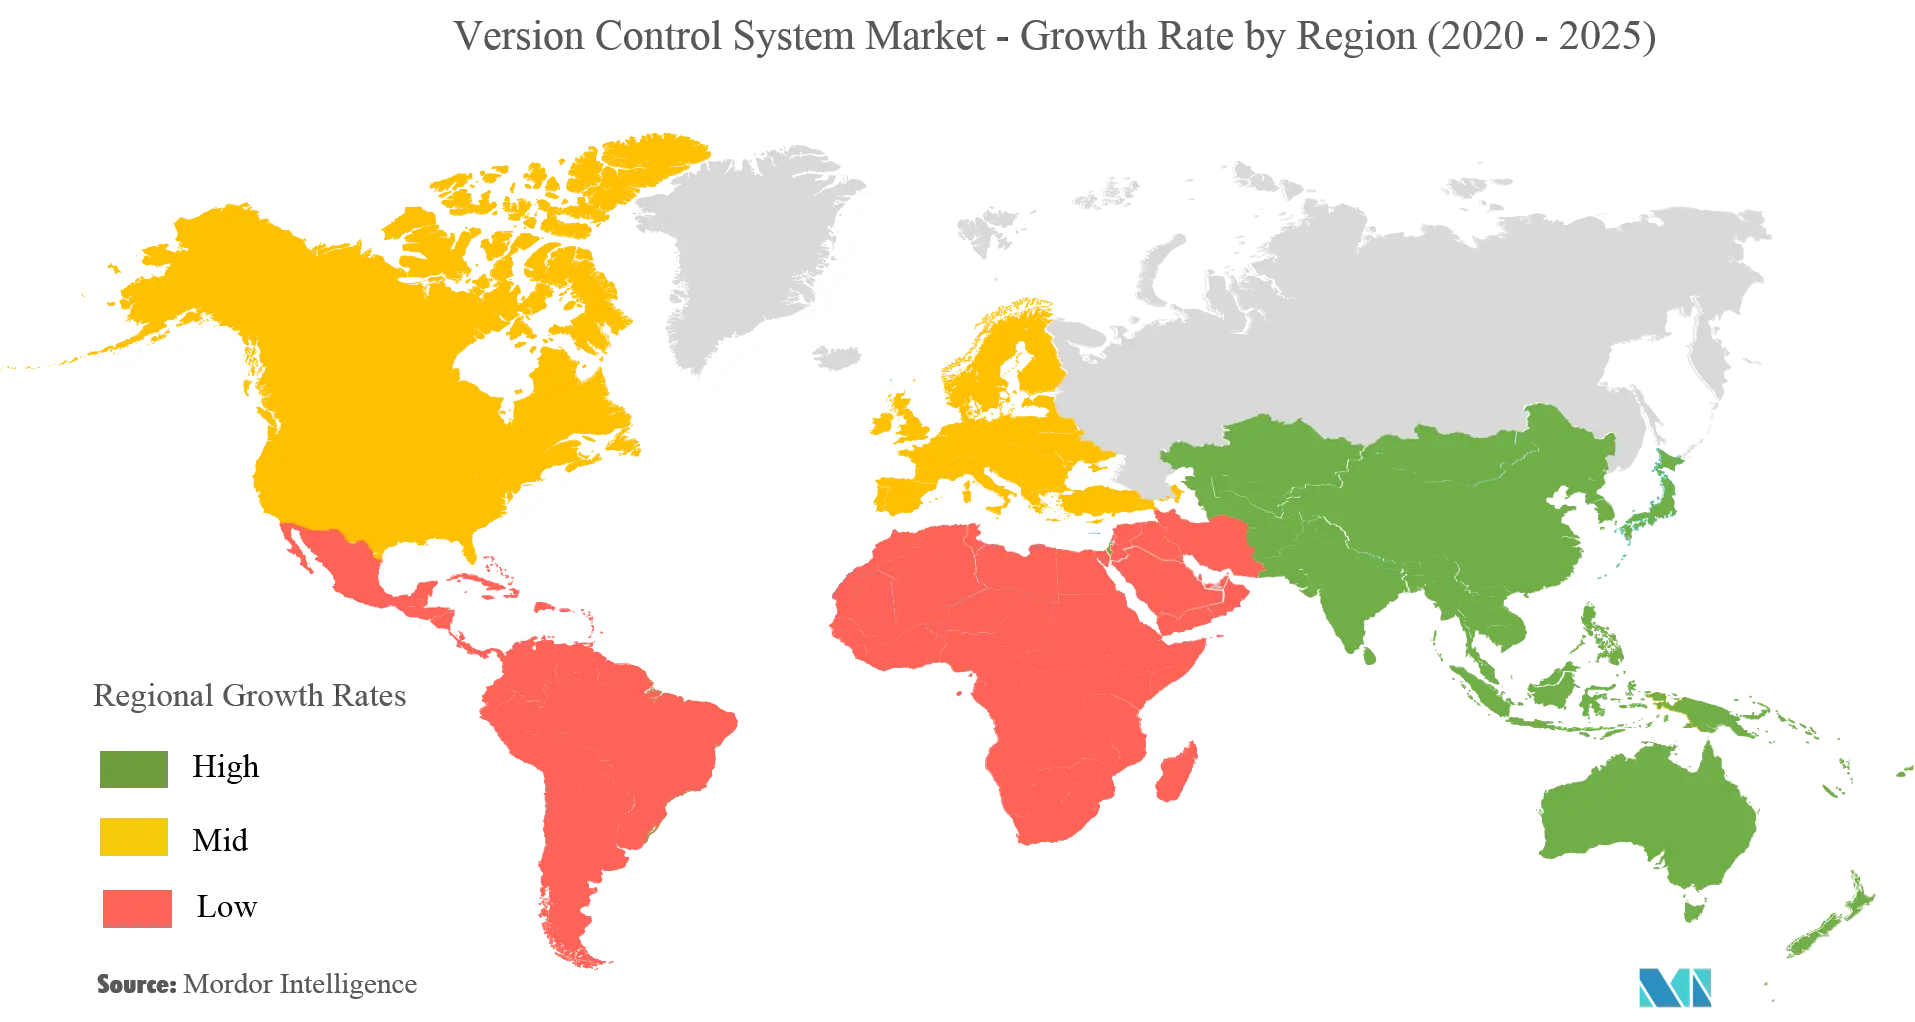 version control system market trends	